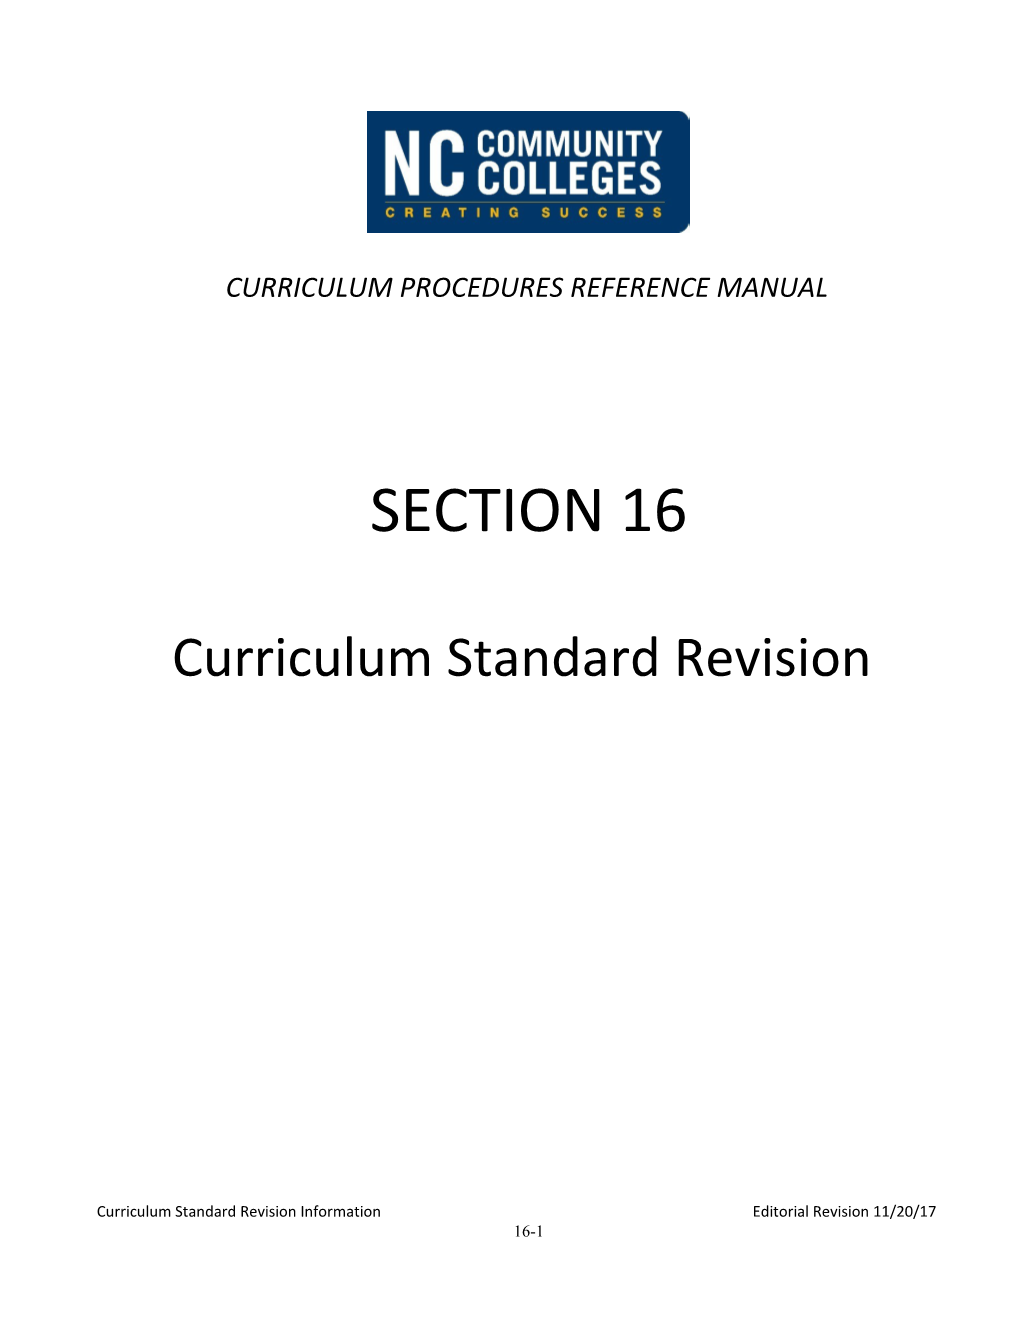 Curriculum Procedures Reference Manual